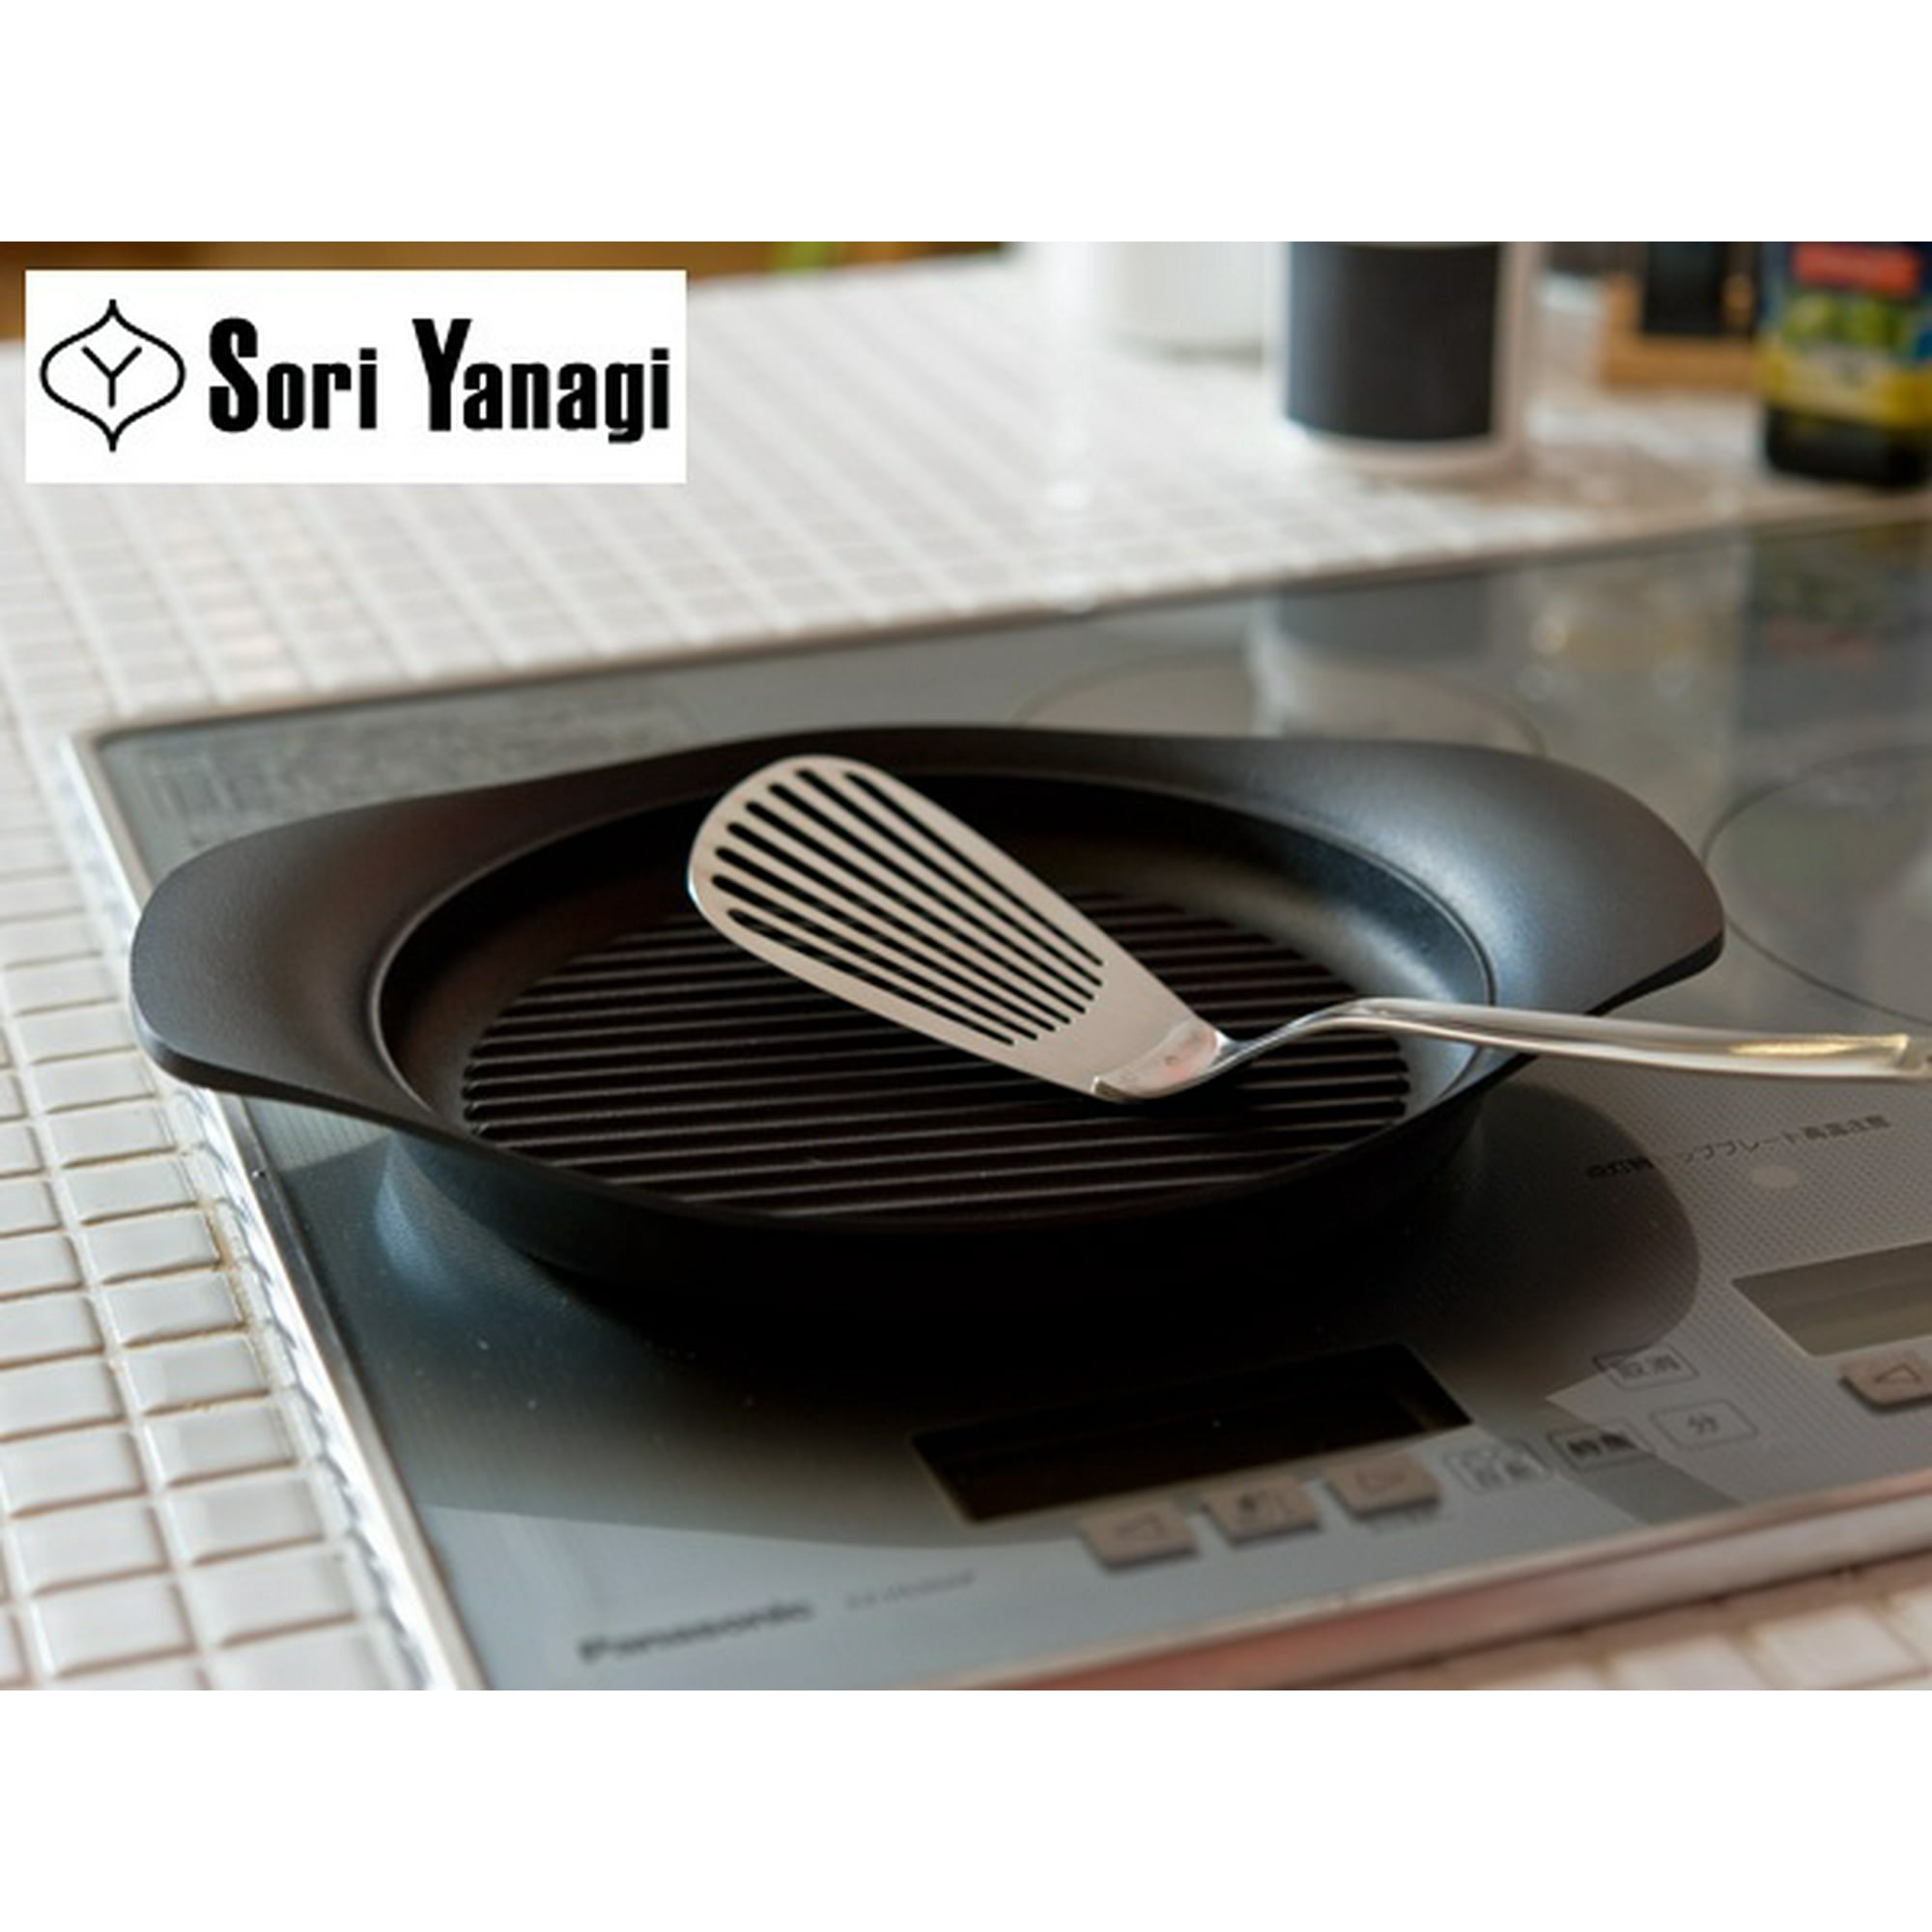 Sori Yanagi Cast Iron Induction Oil Pan Griddle 22cm with